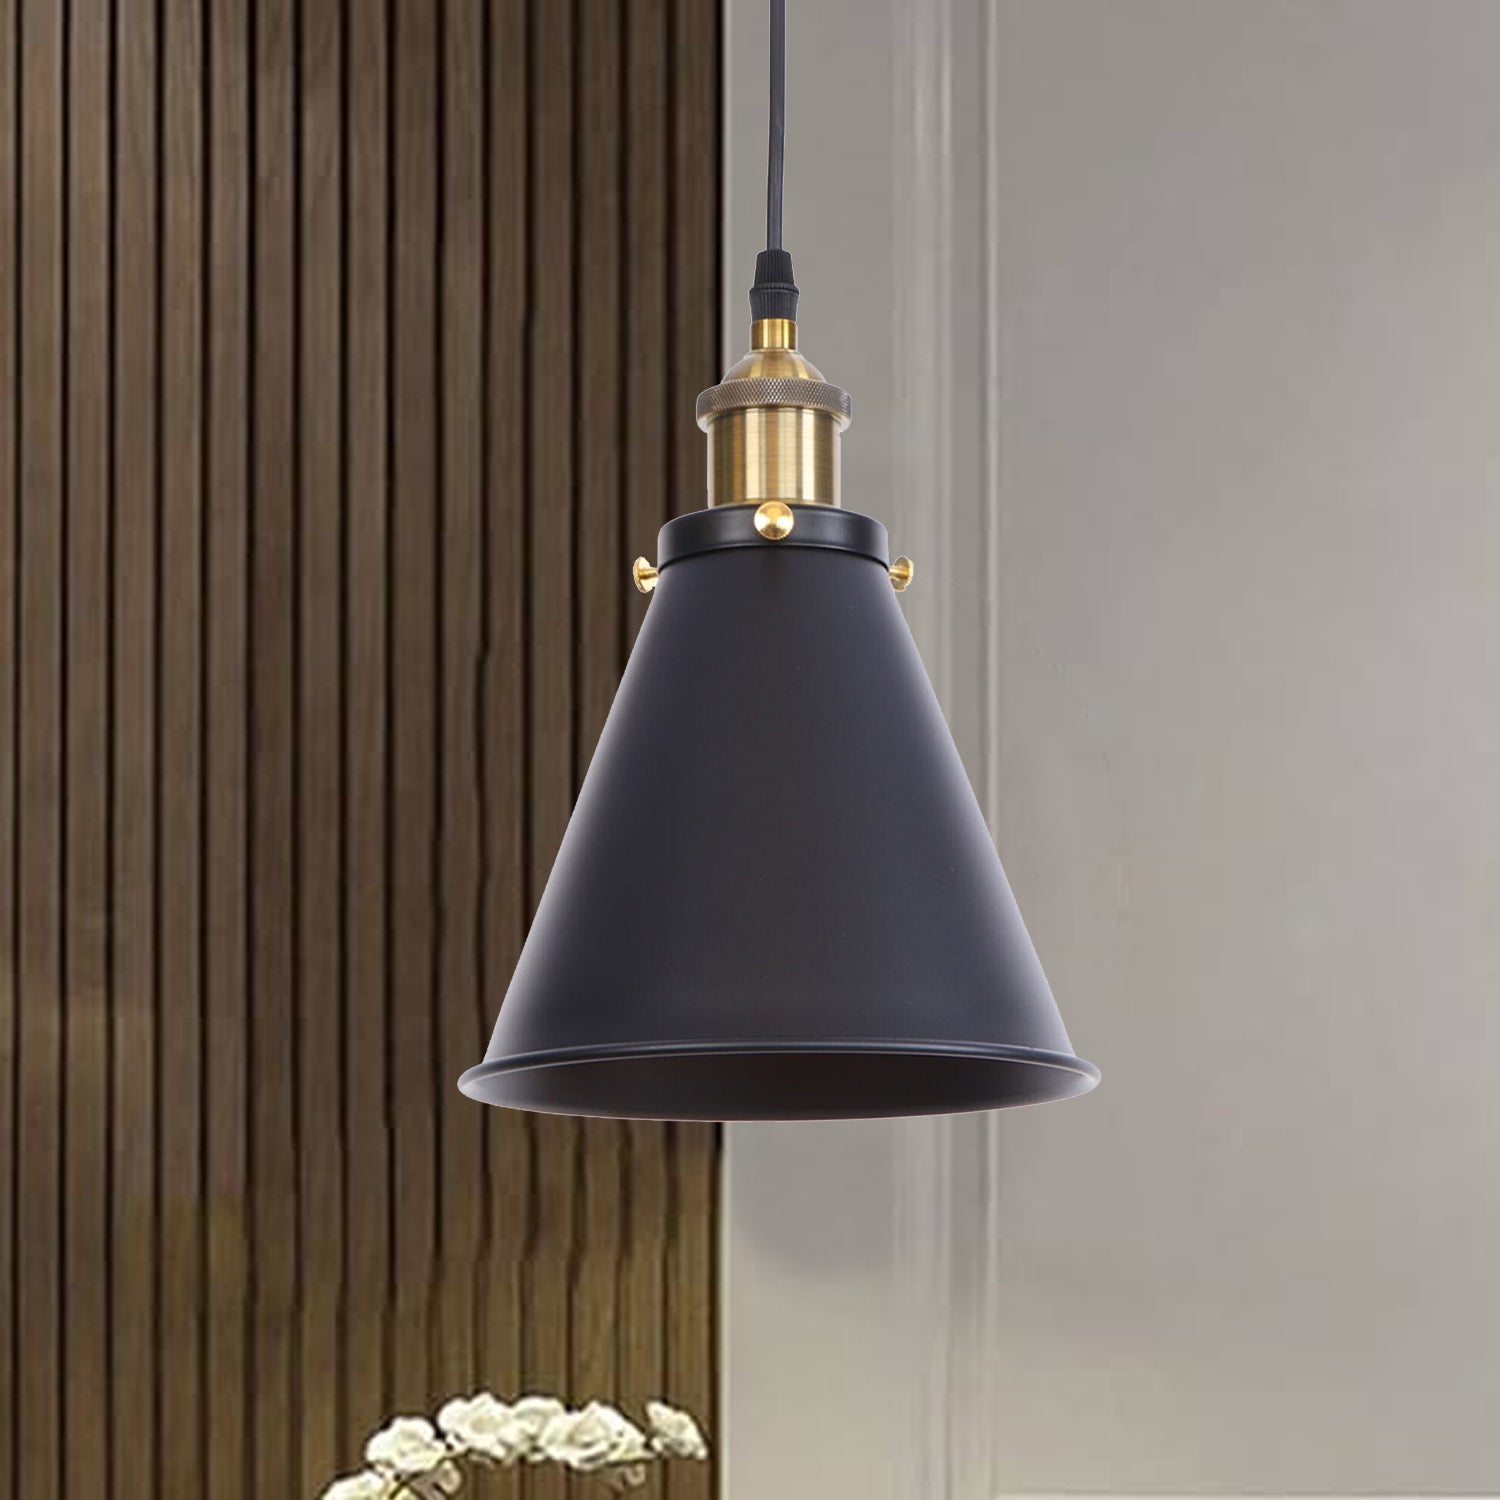 Industrial Retro Lamp Shade Loft Light Cluster Ceiling Pendant Light~2887